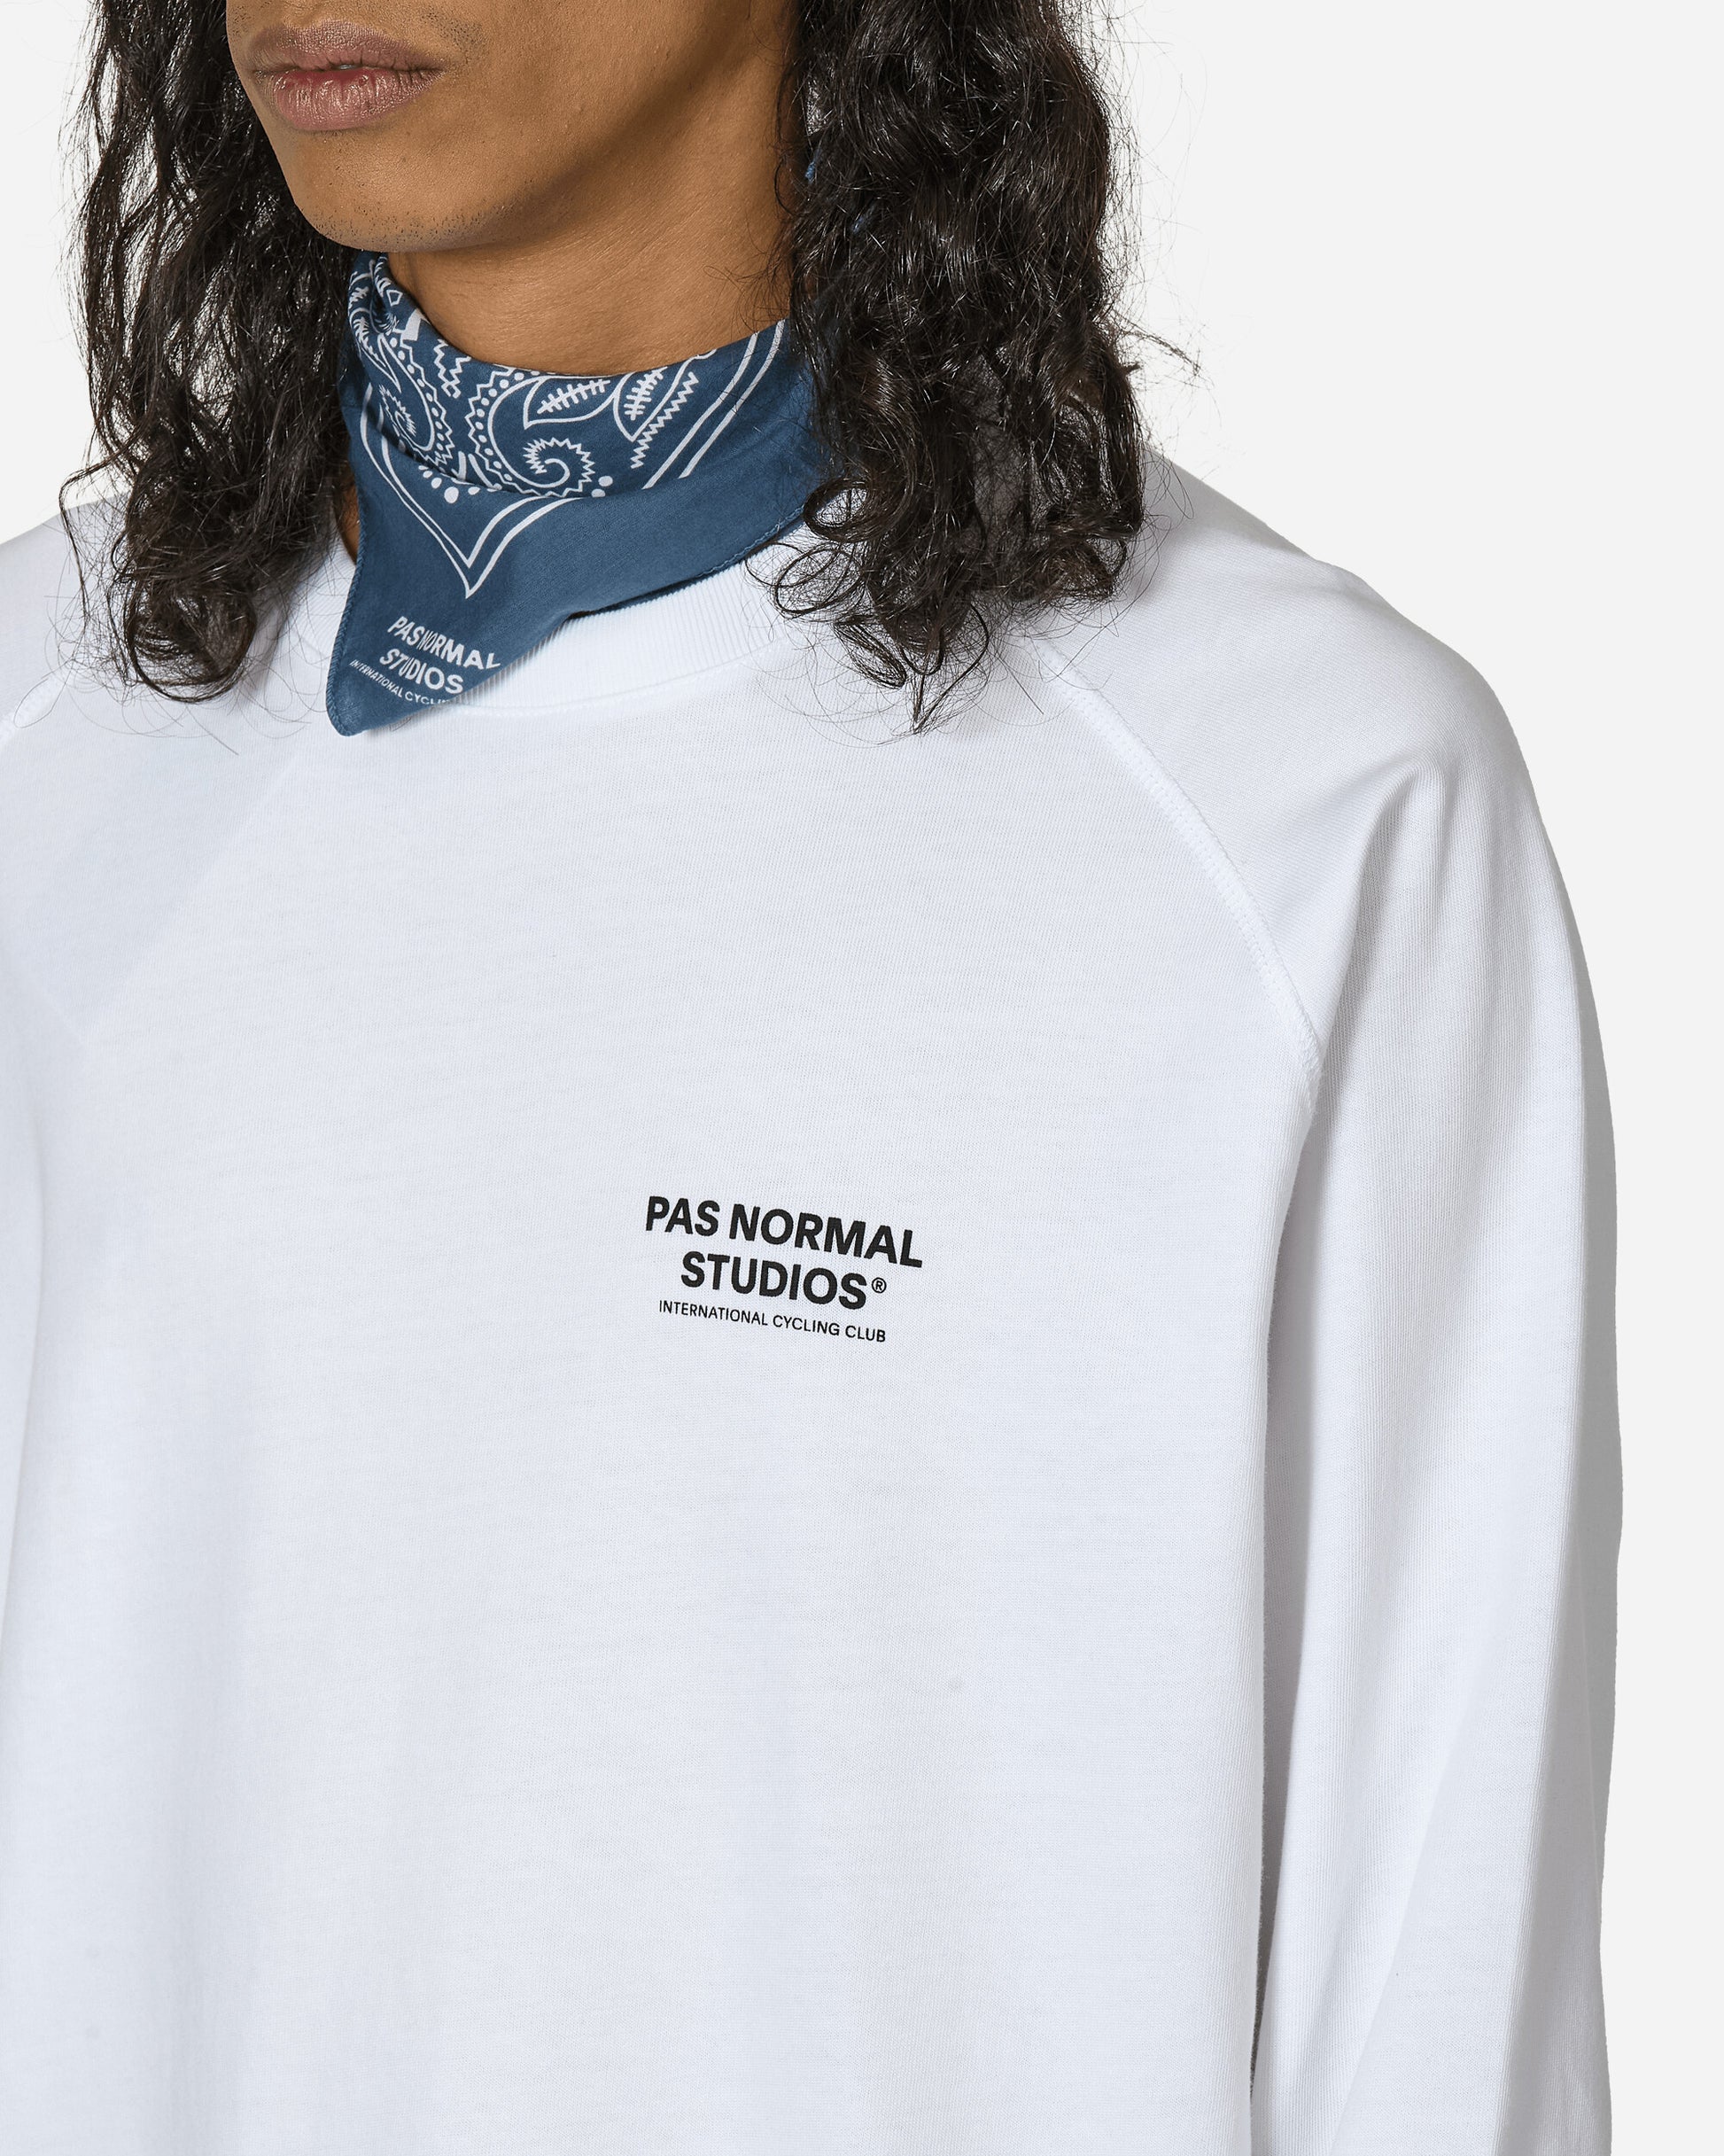 Pas Normal Studios Off-Race Pns Long Sleeve T-Shirt White T-Shirts Longsleeve NP2060HA 2100